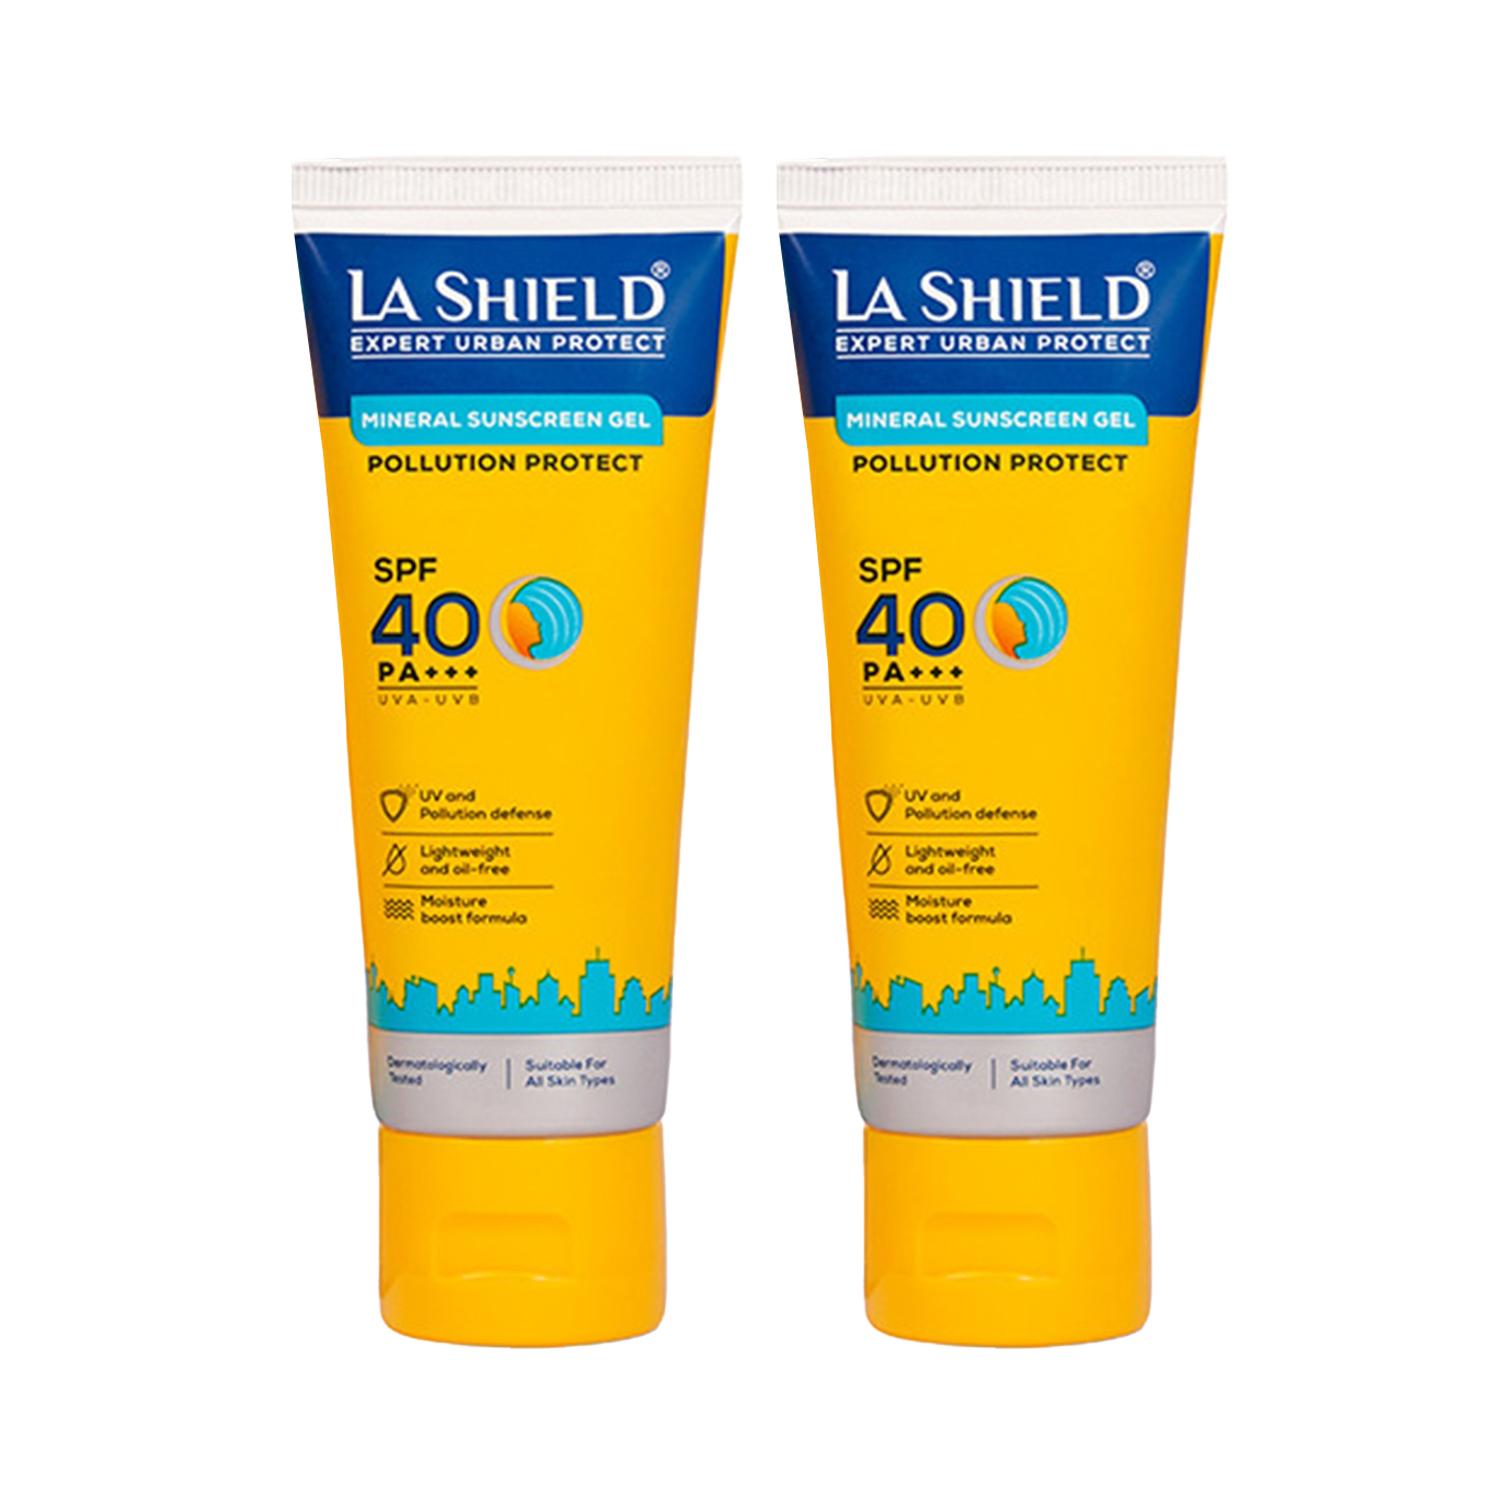 La Shield | La Shield Pollution Protect Mineral Sunscreen Gel SPF 50 Pack of 2 (50 g) Combo